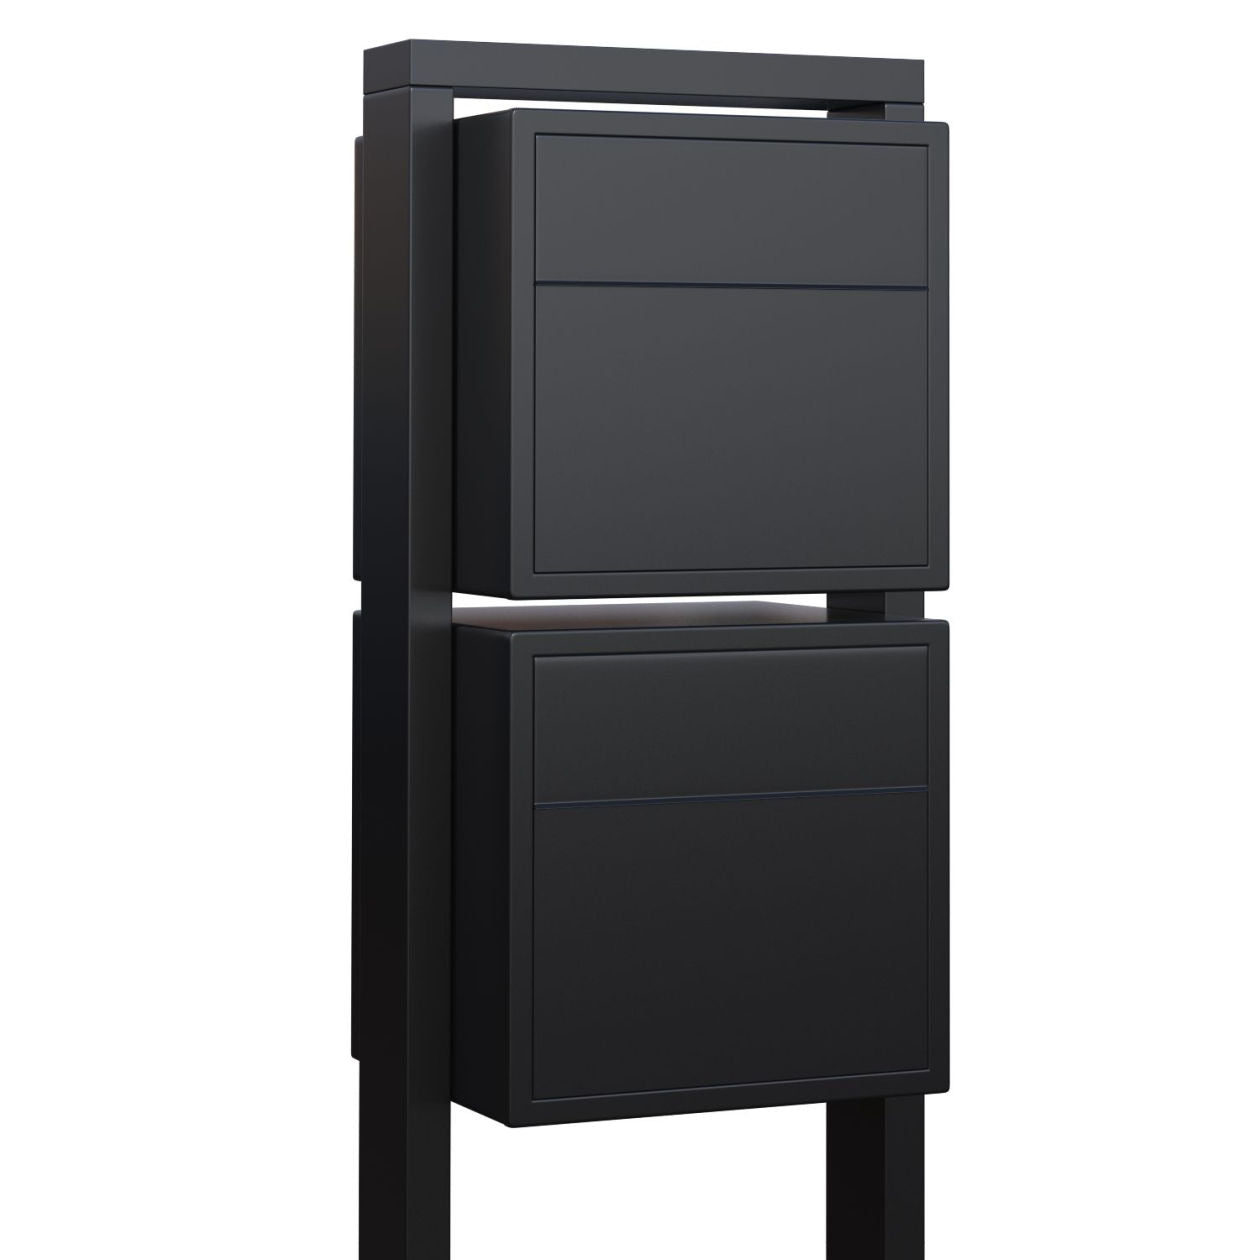 SOPRANO 2 by Bravios - Modern post-mounted 2-unit black mailbox